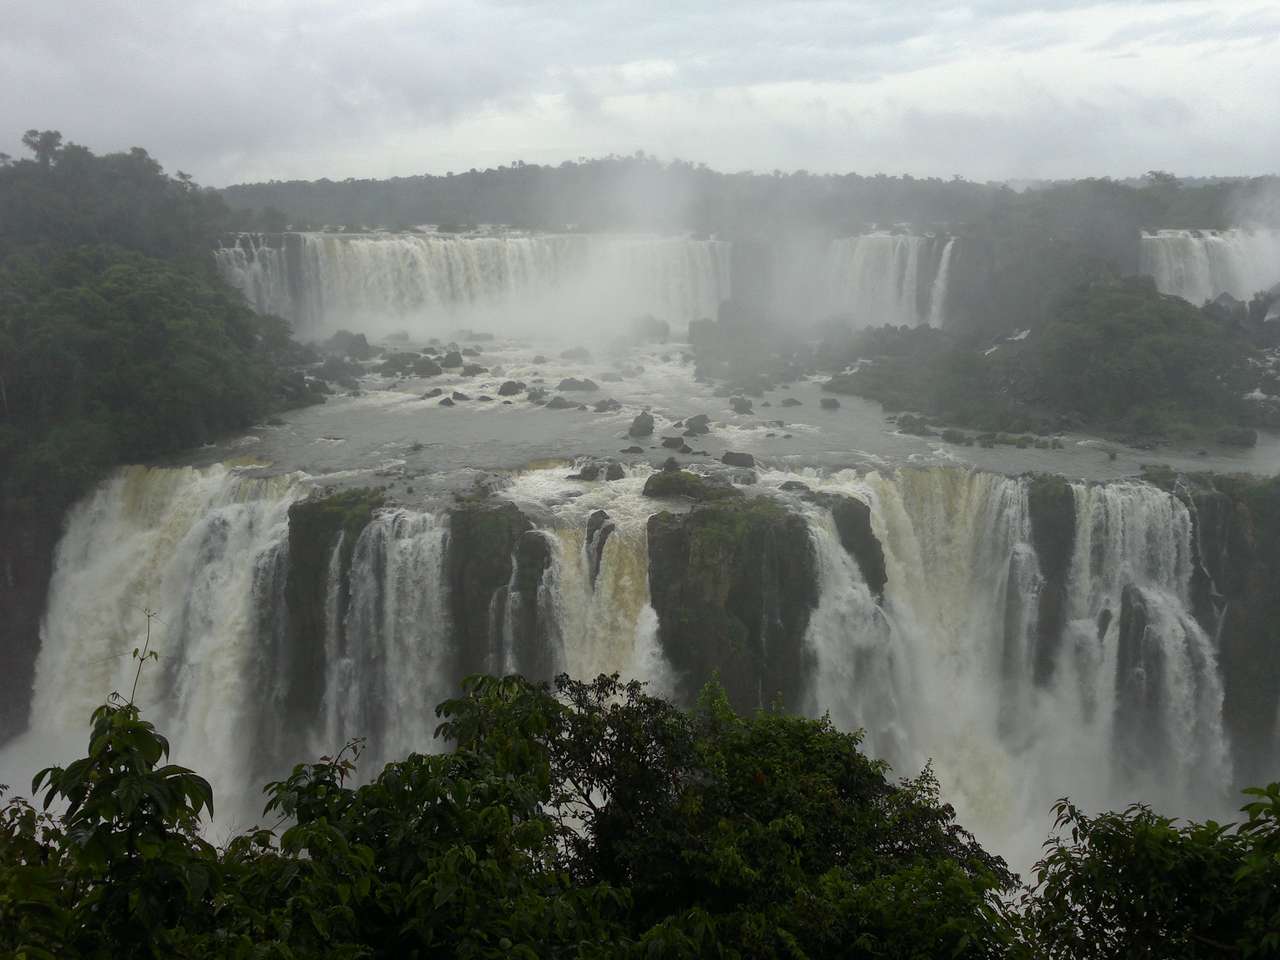 Iguazú Falls puzzle online from photo